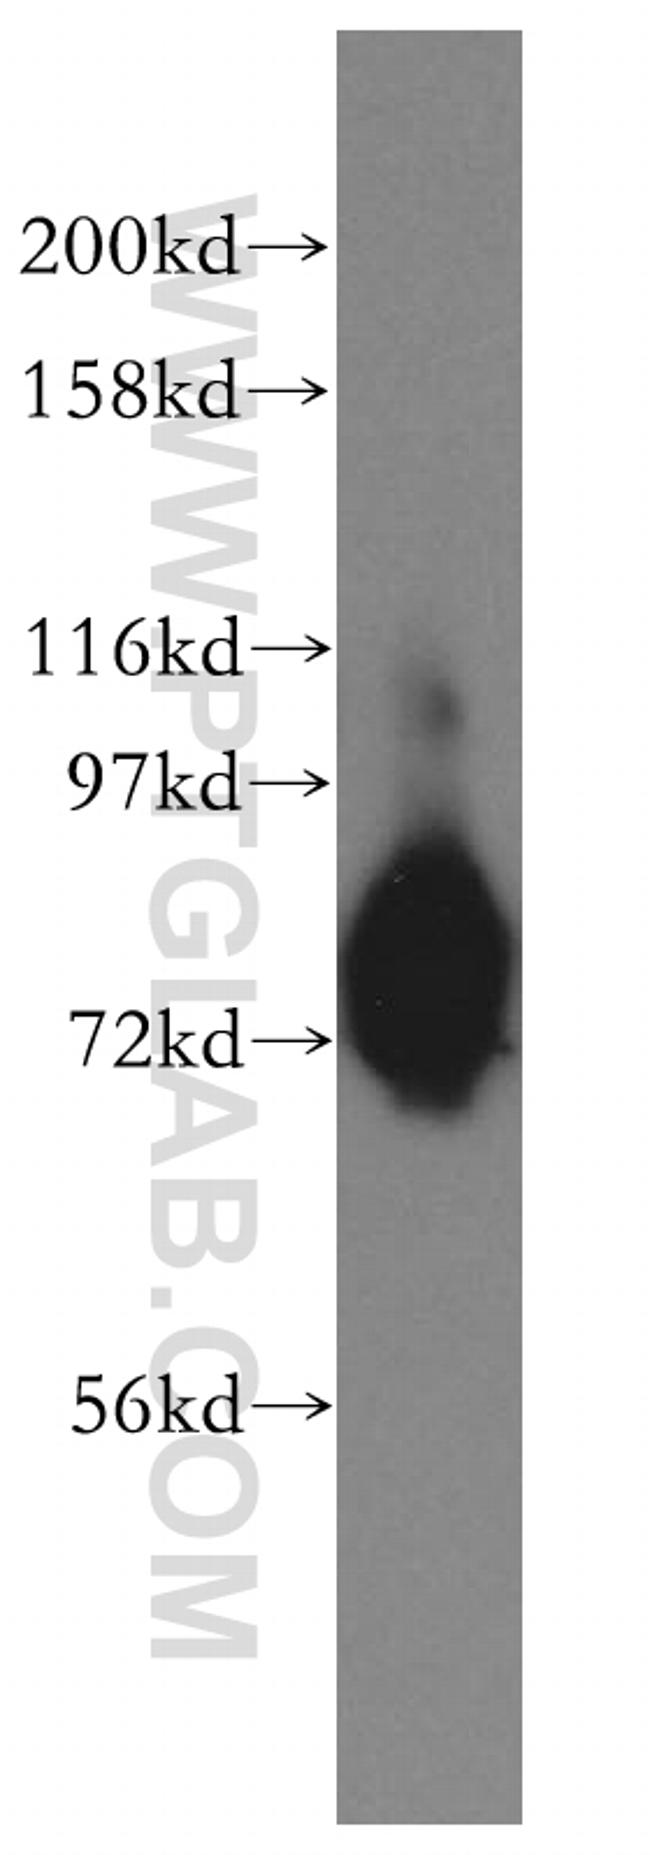 GALNT7 Antibody in Western Blot (WB)